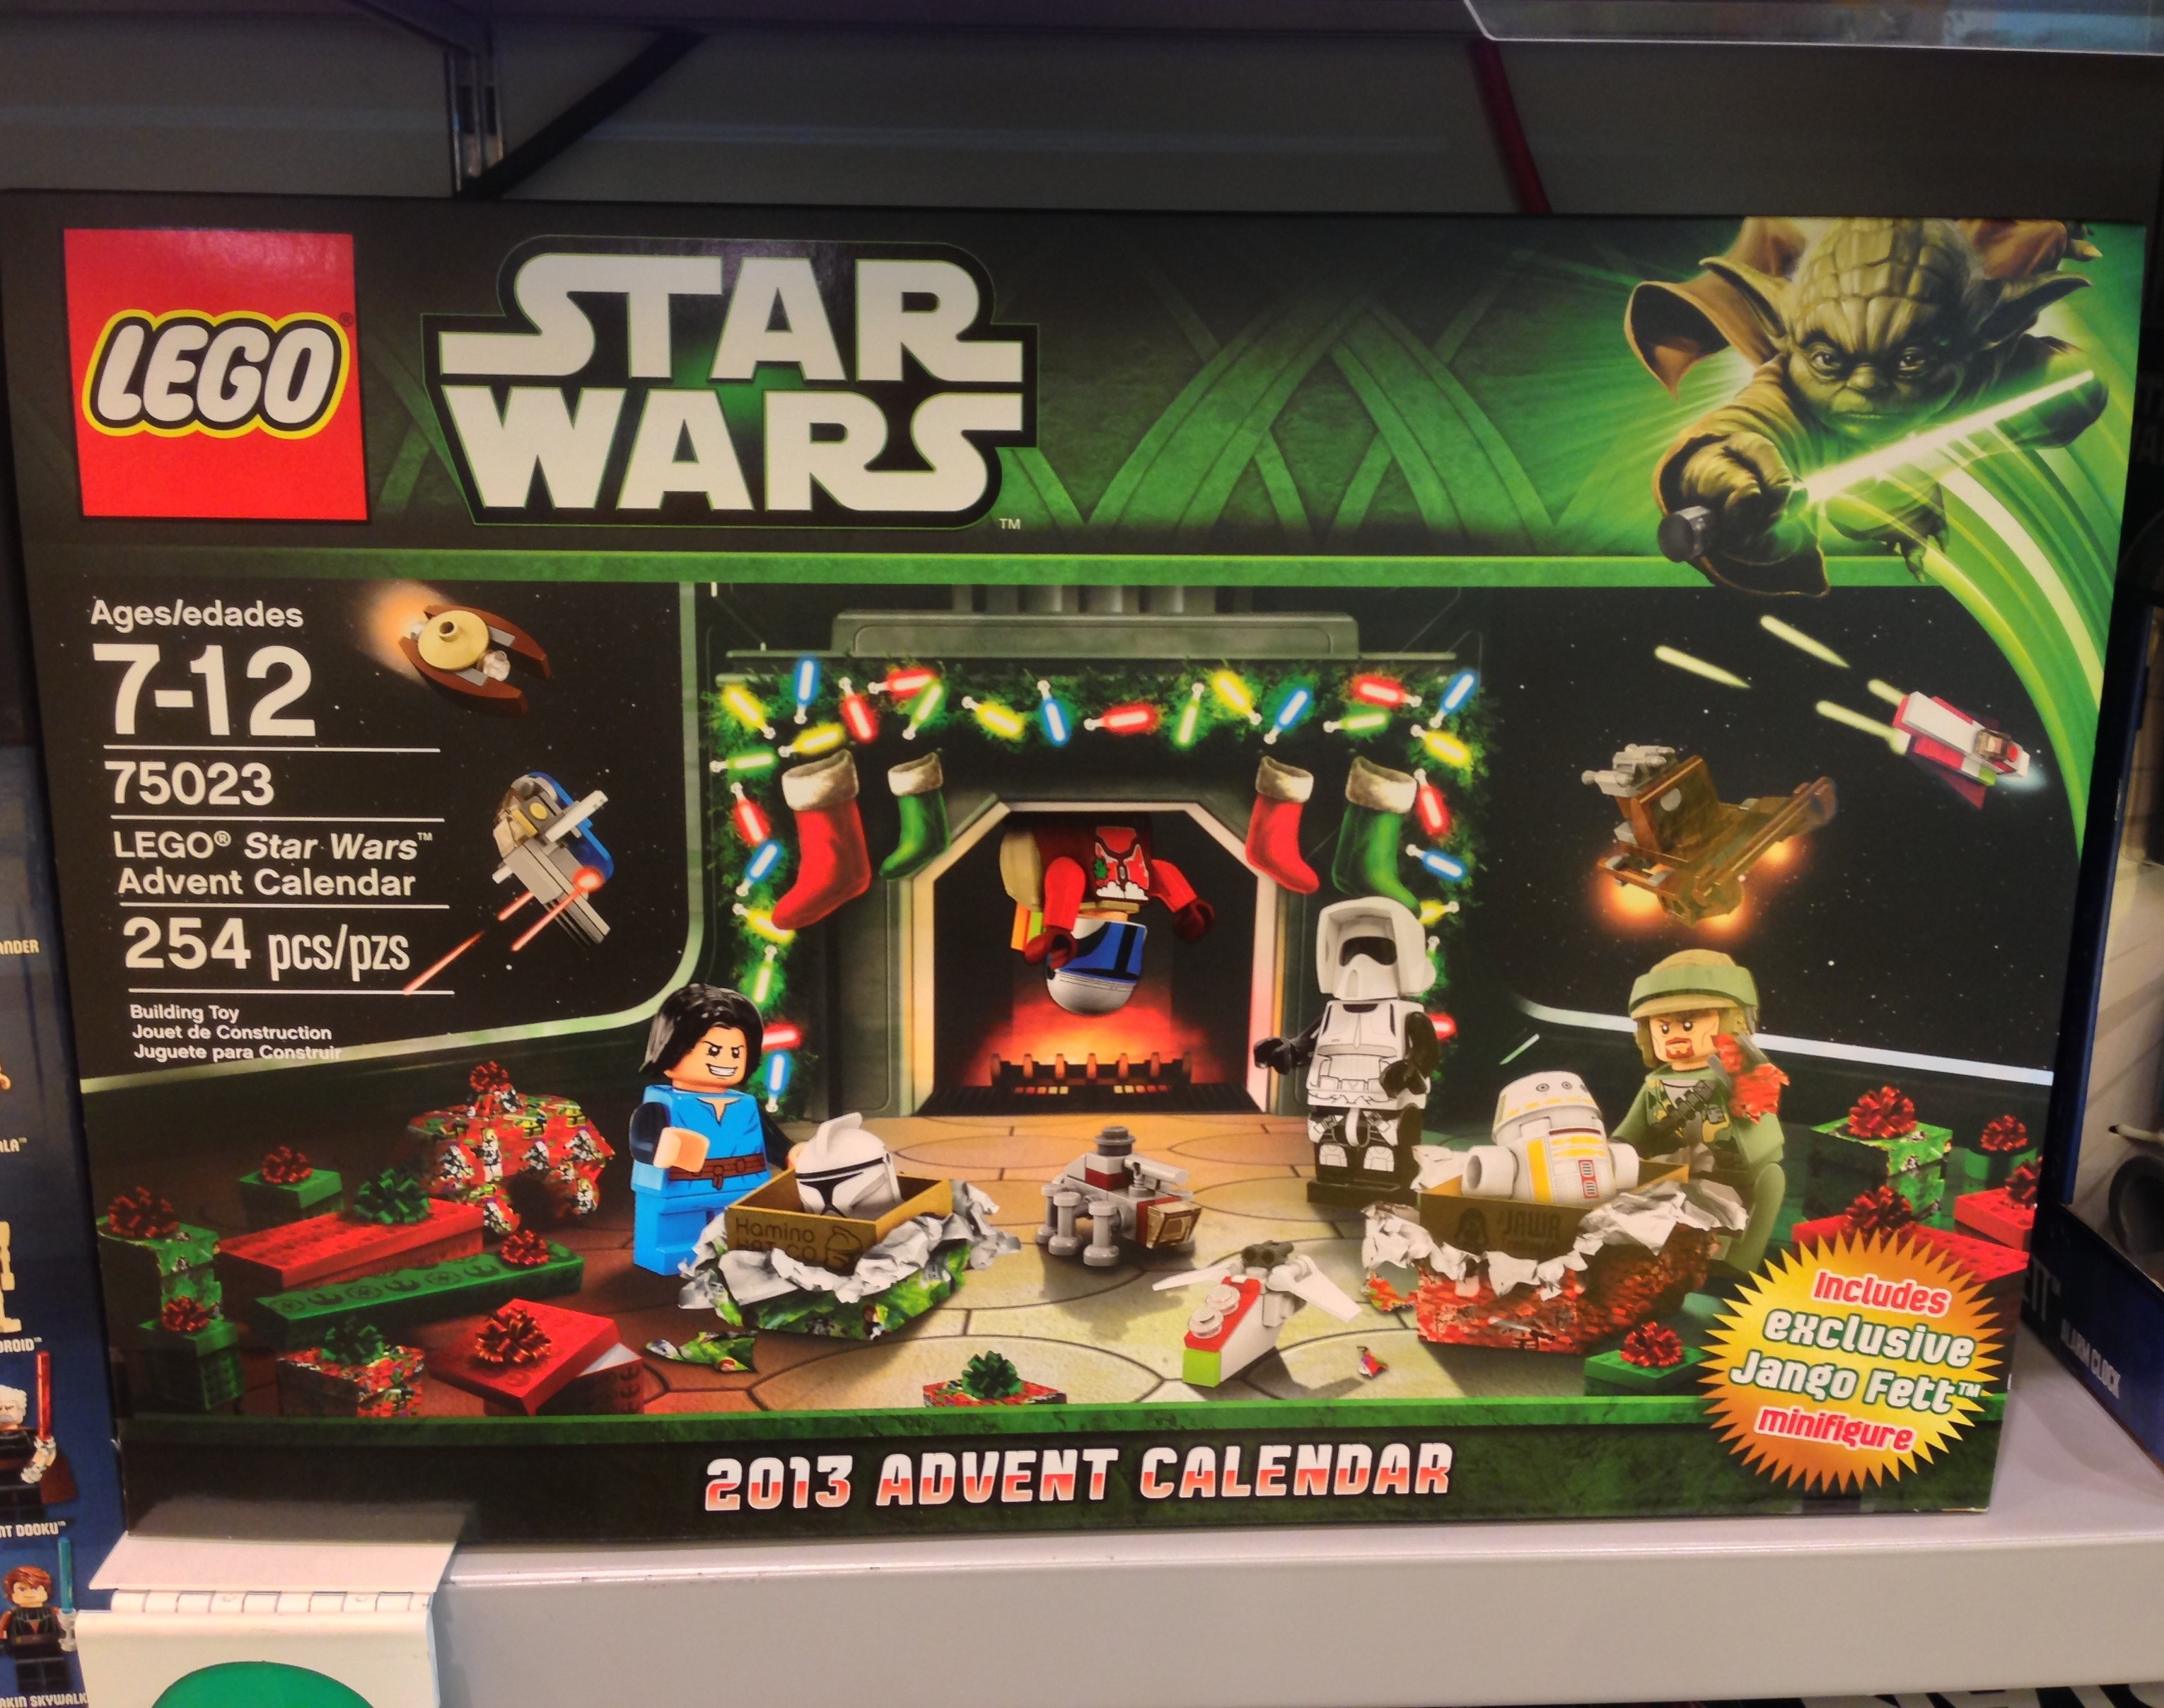 2013 LEGO Star Wars Advent Calendar 75023 Released in Stores Bricks